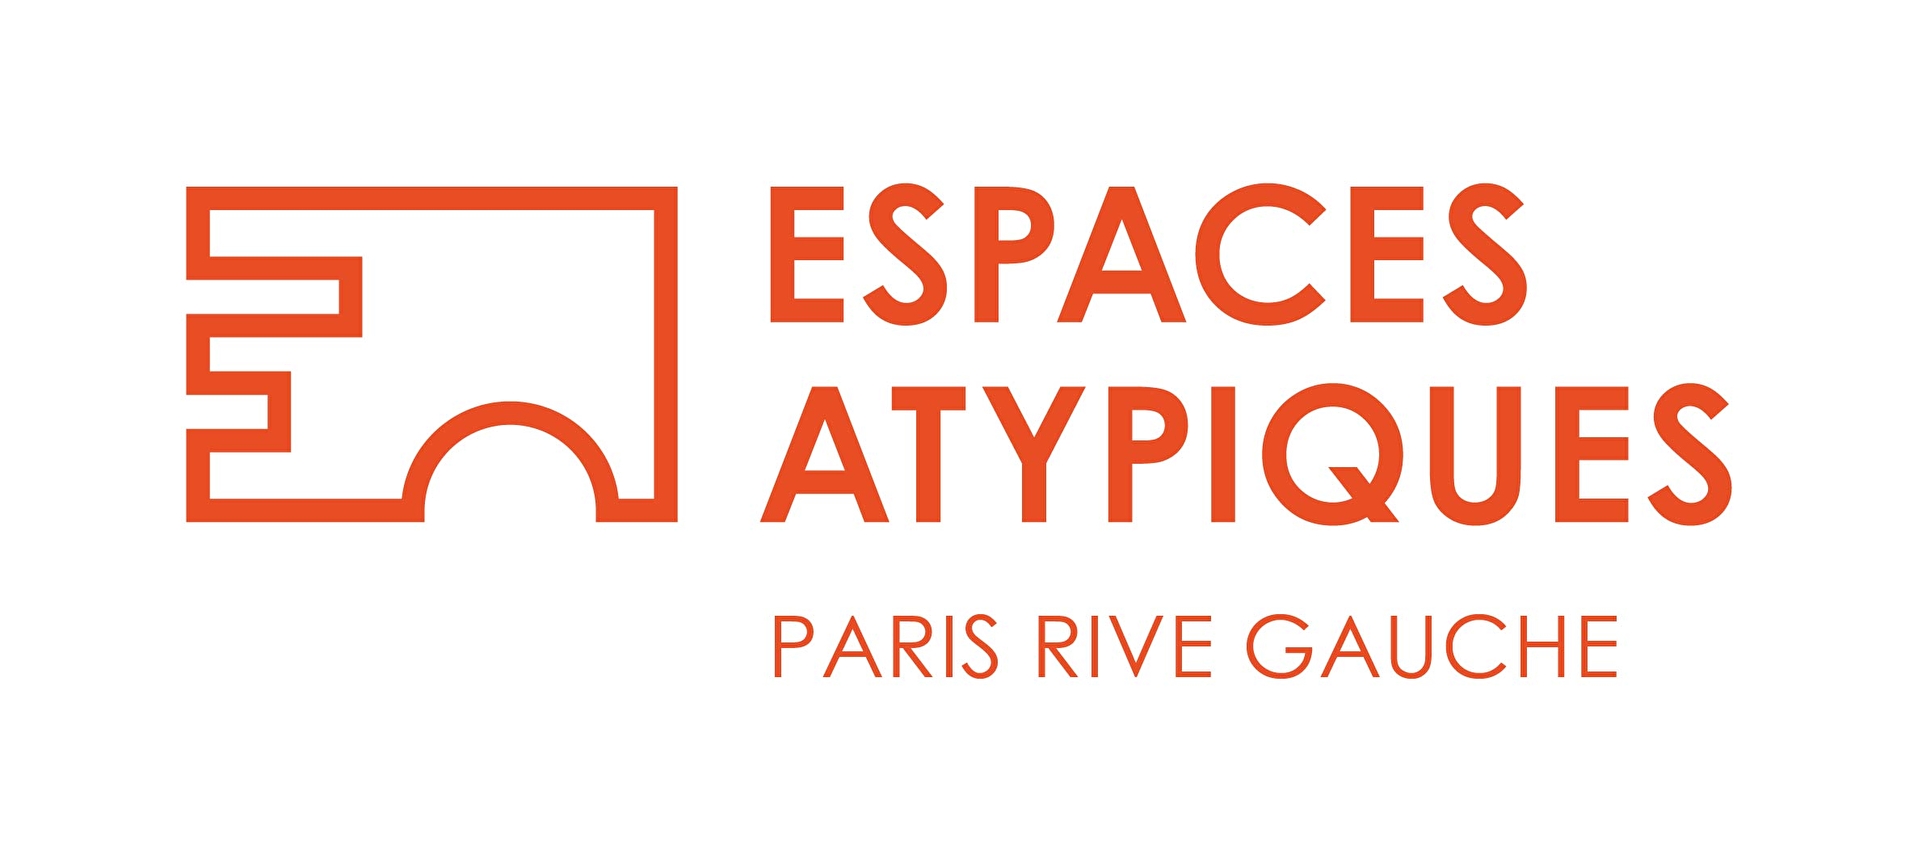 ESPACES ATYPIQUES Paris - ESPACES ATYPIQUES Paris - Rive Gauche